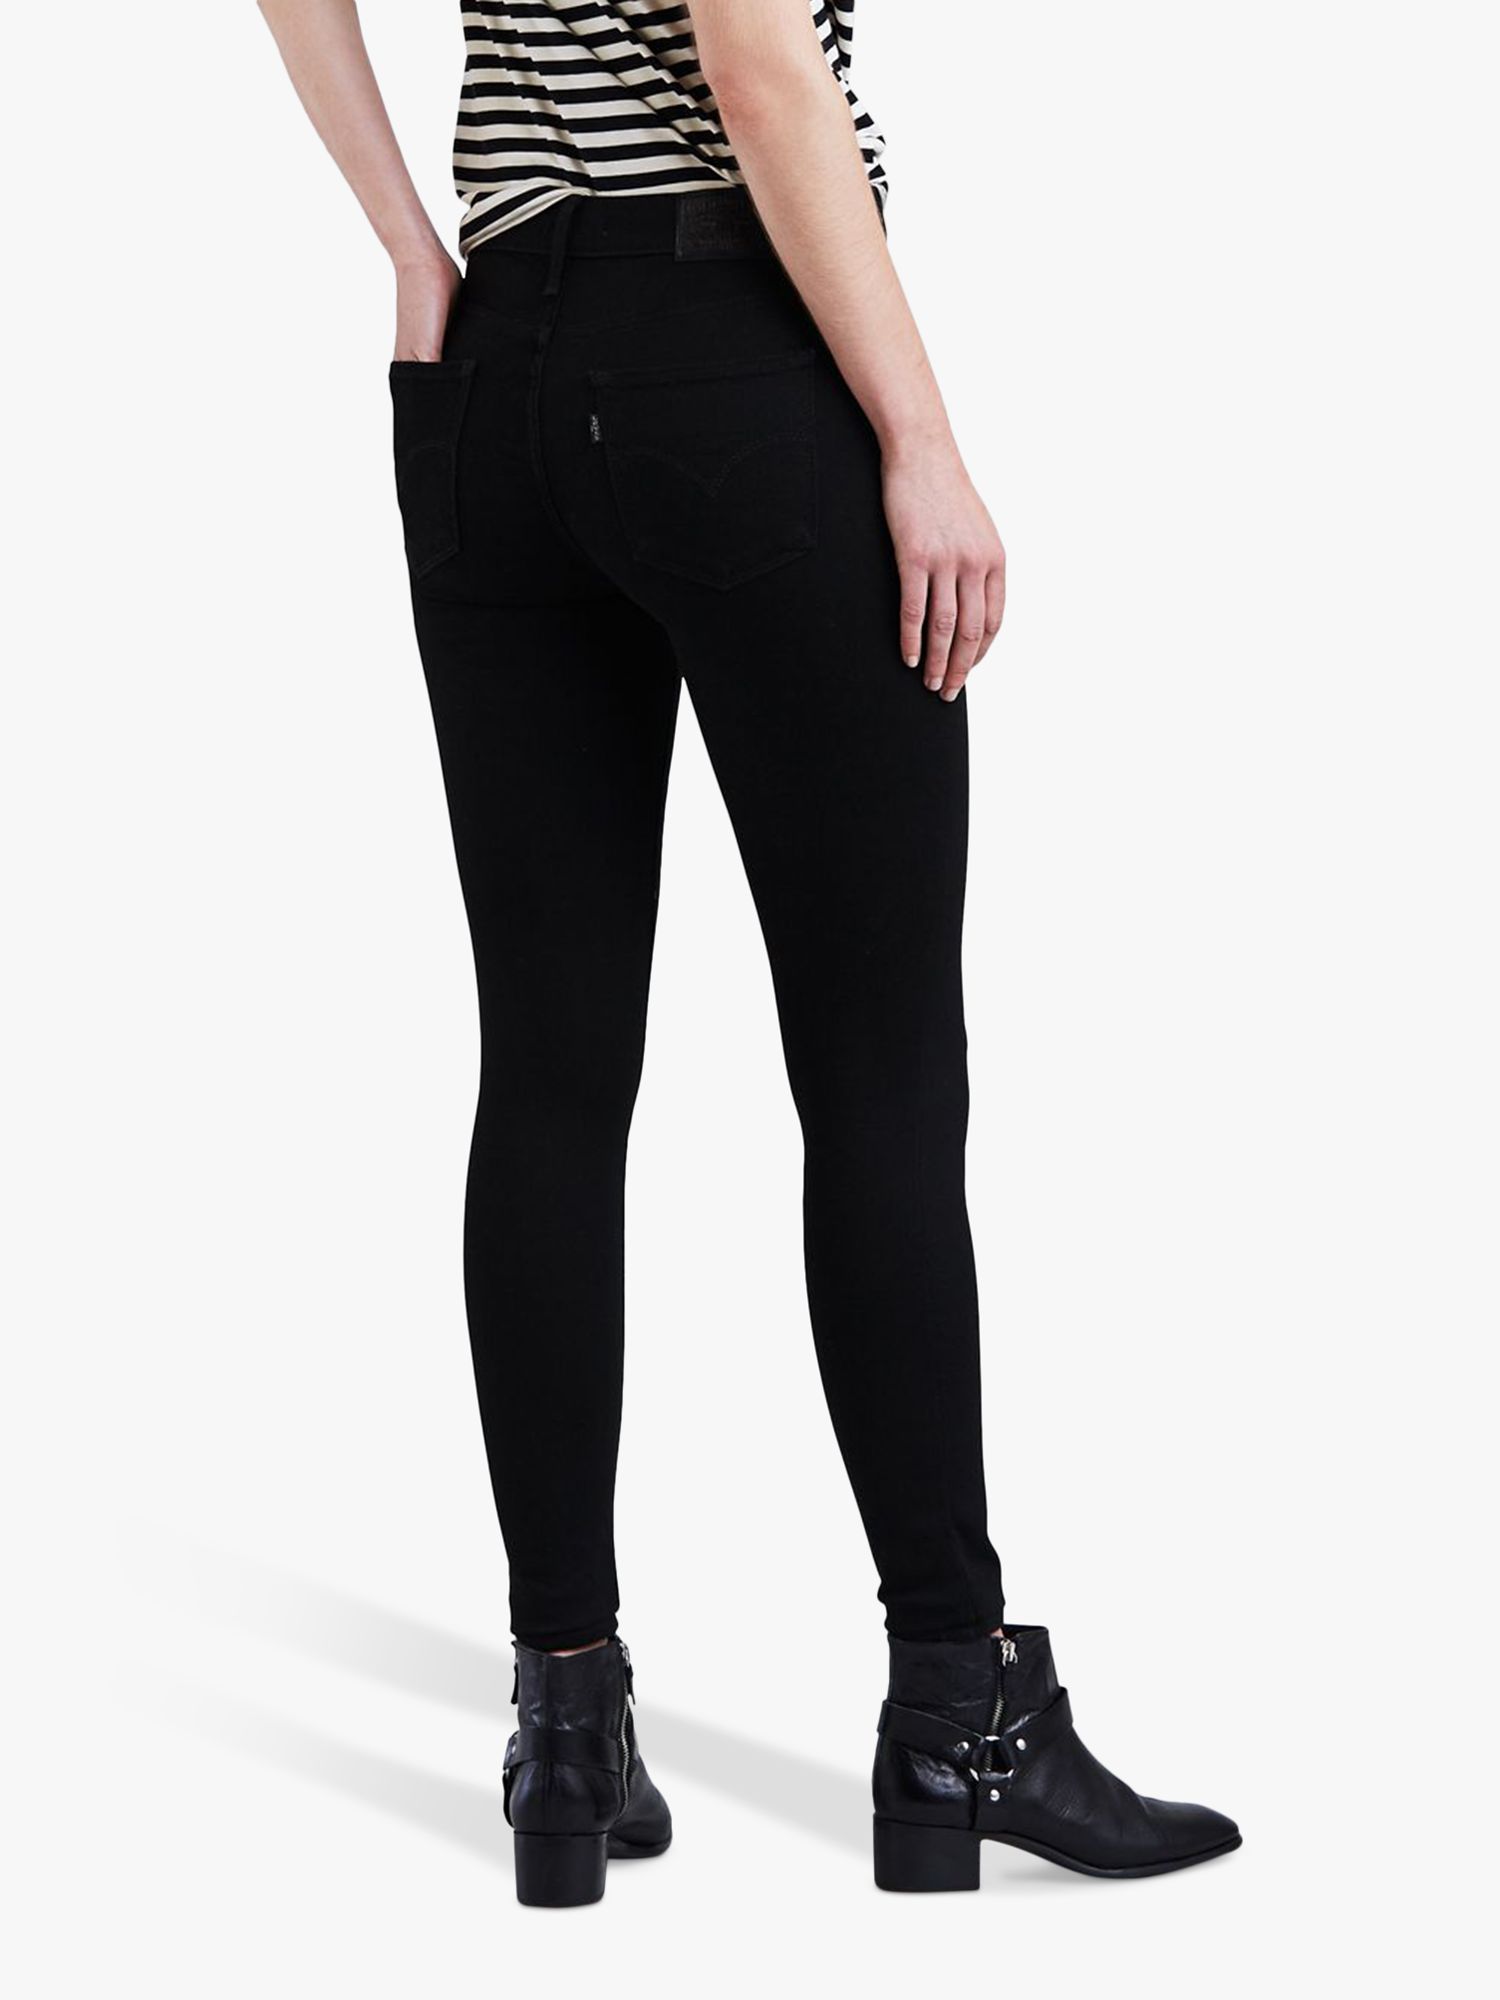 Levi's 720 High Rise Super Skinny Jeans, Celestial Black, W25/L32